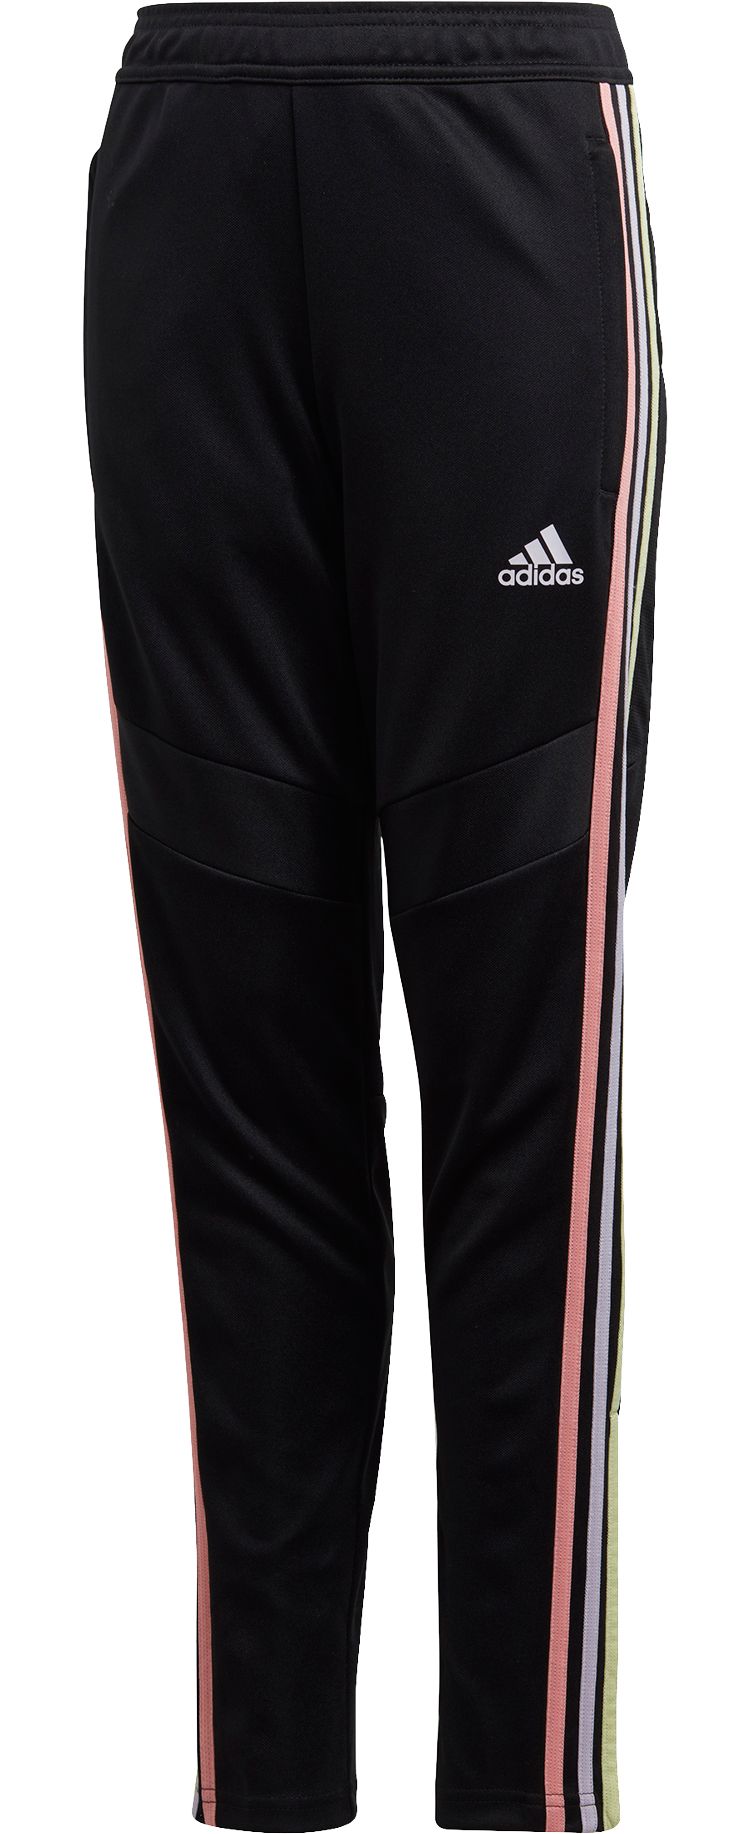 boys adidas soccer pants